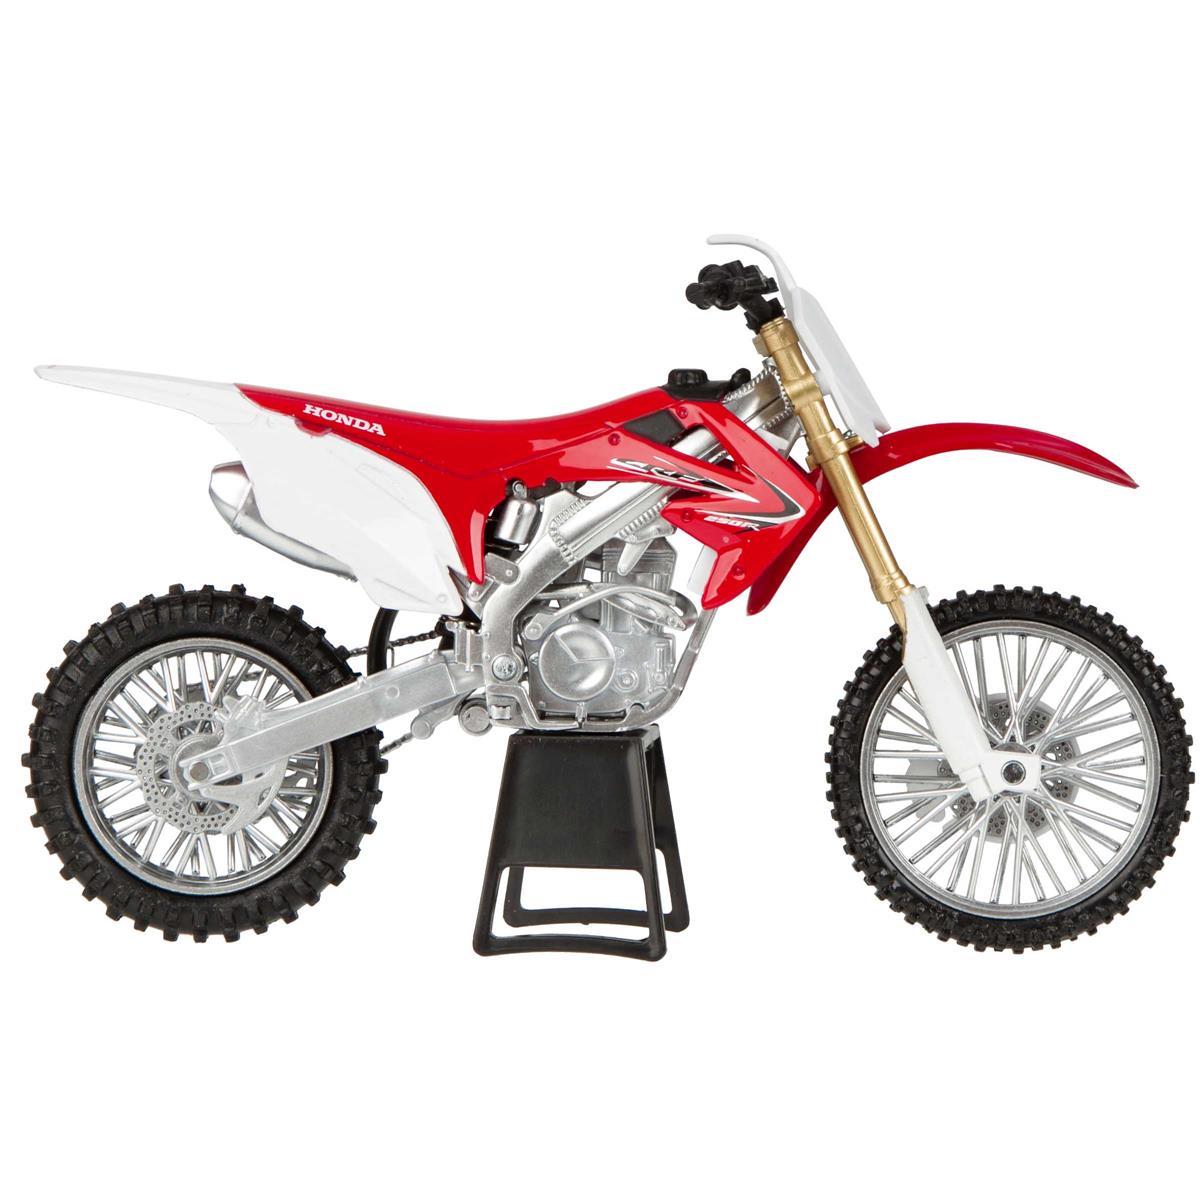 New Ray HONDA CRF 450 1:12 KIT DieCast Motocross Mx Motorbike Kids Toy Model Red 